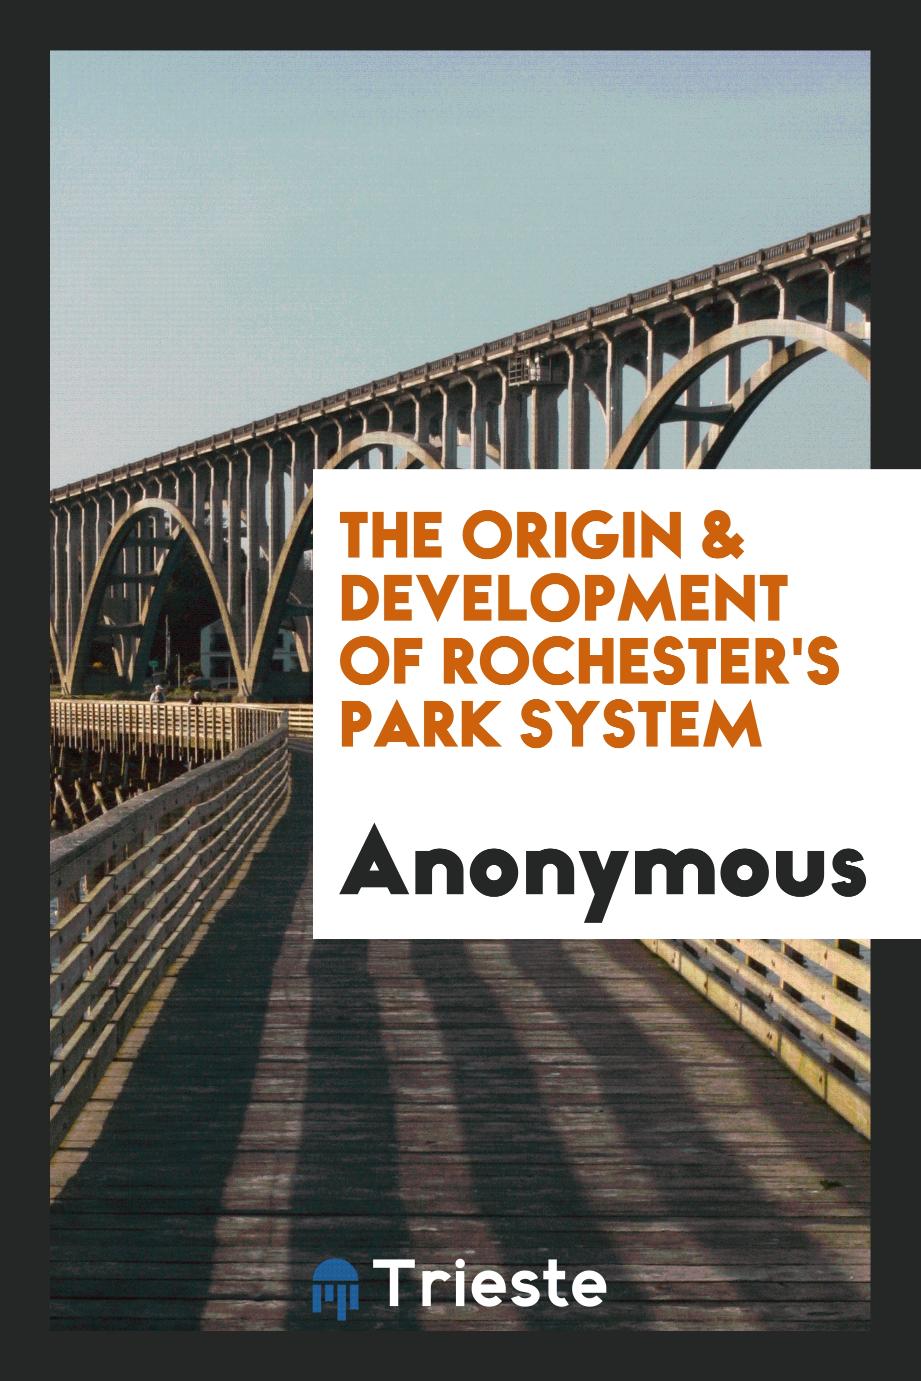 The Origin & Development of Rochester's Park System